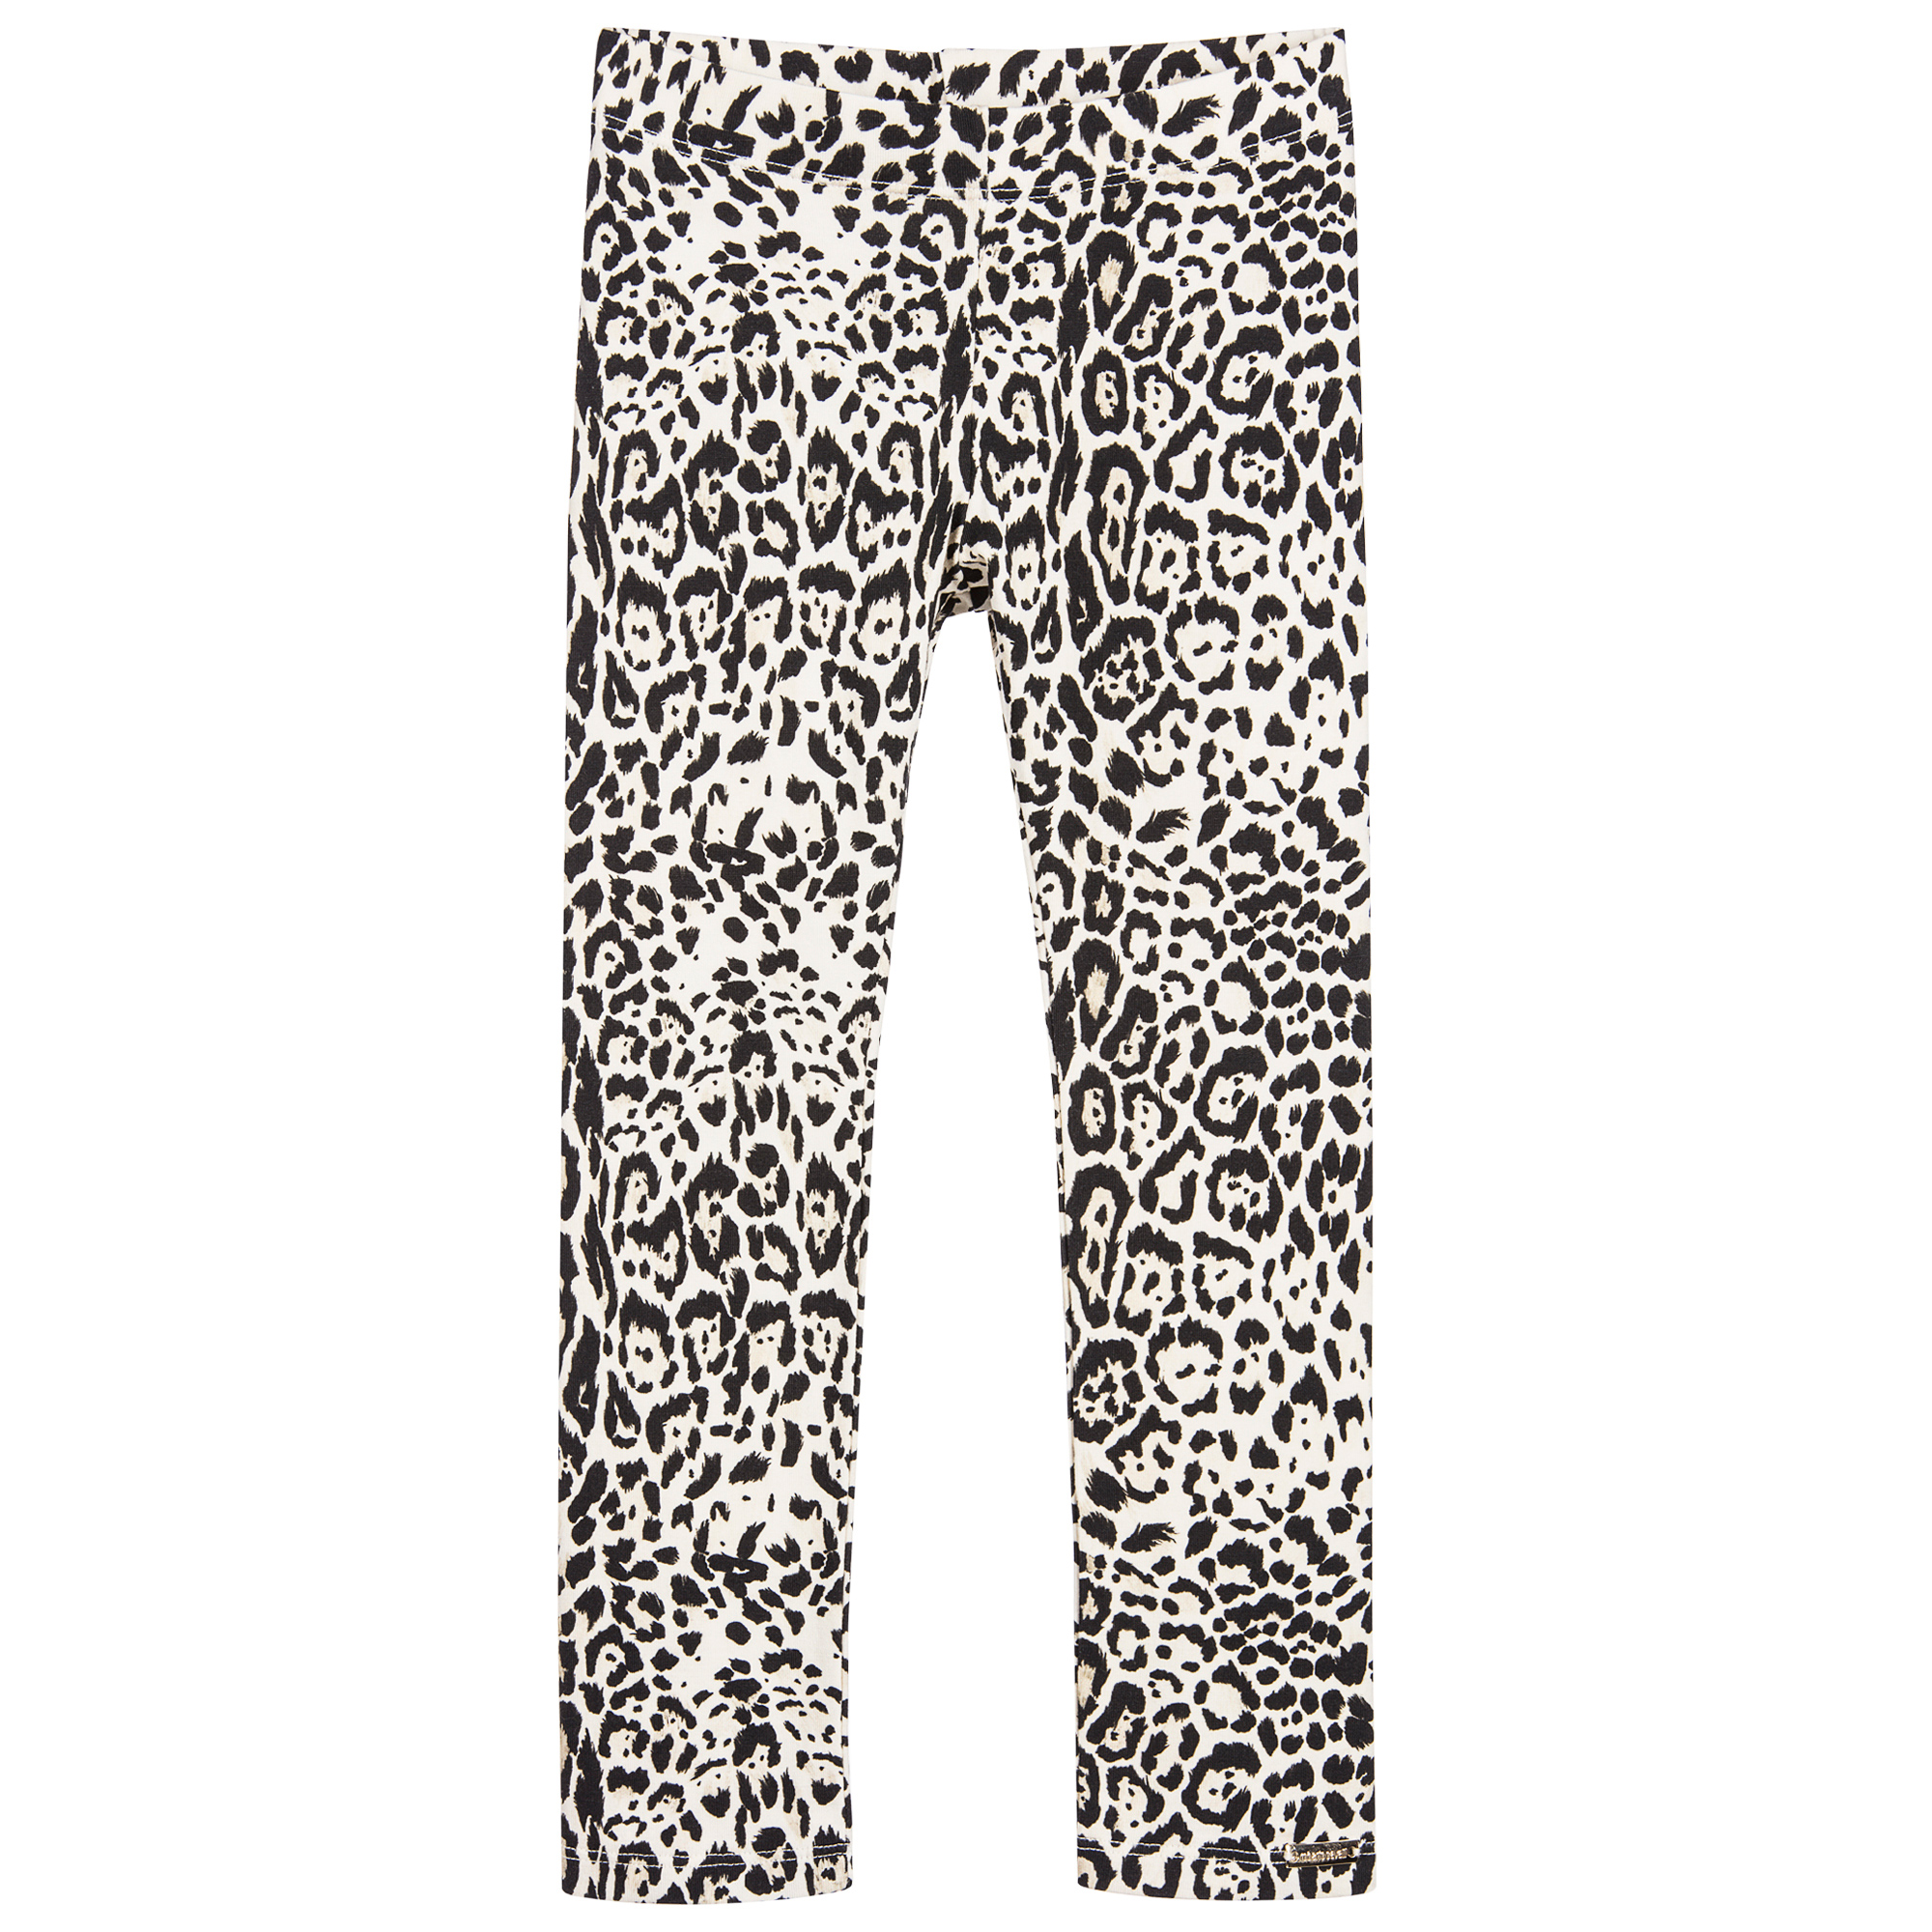 Roberto Cavalli Baby girl Animalier leopard leggings trousers 3 6 9 months NWT 